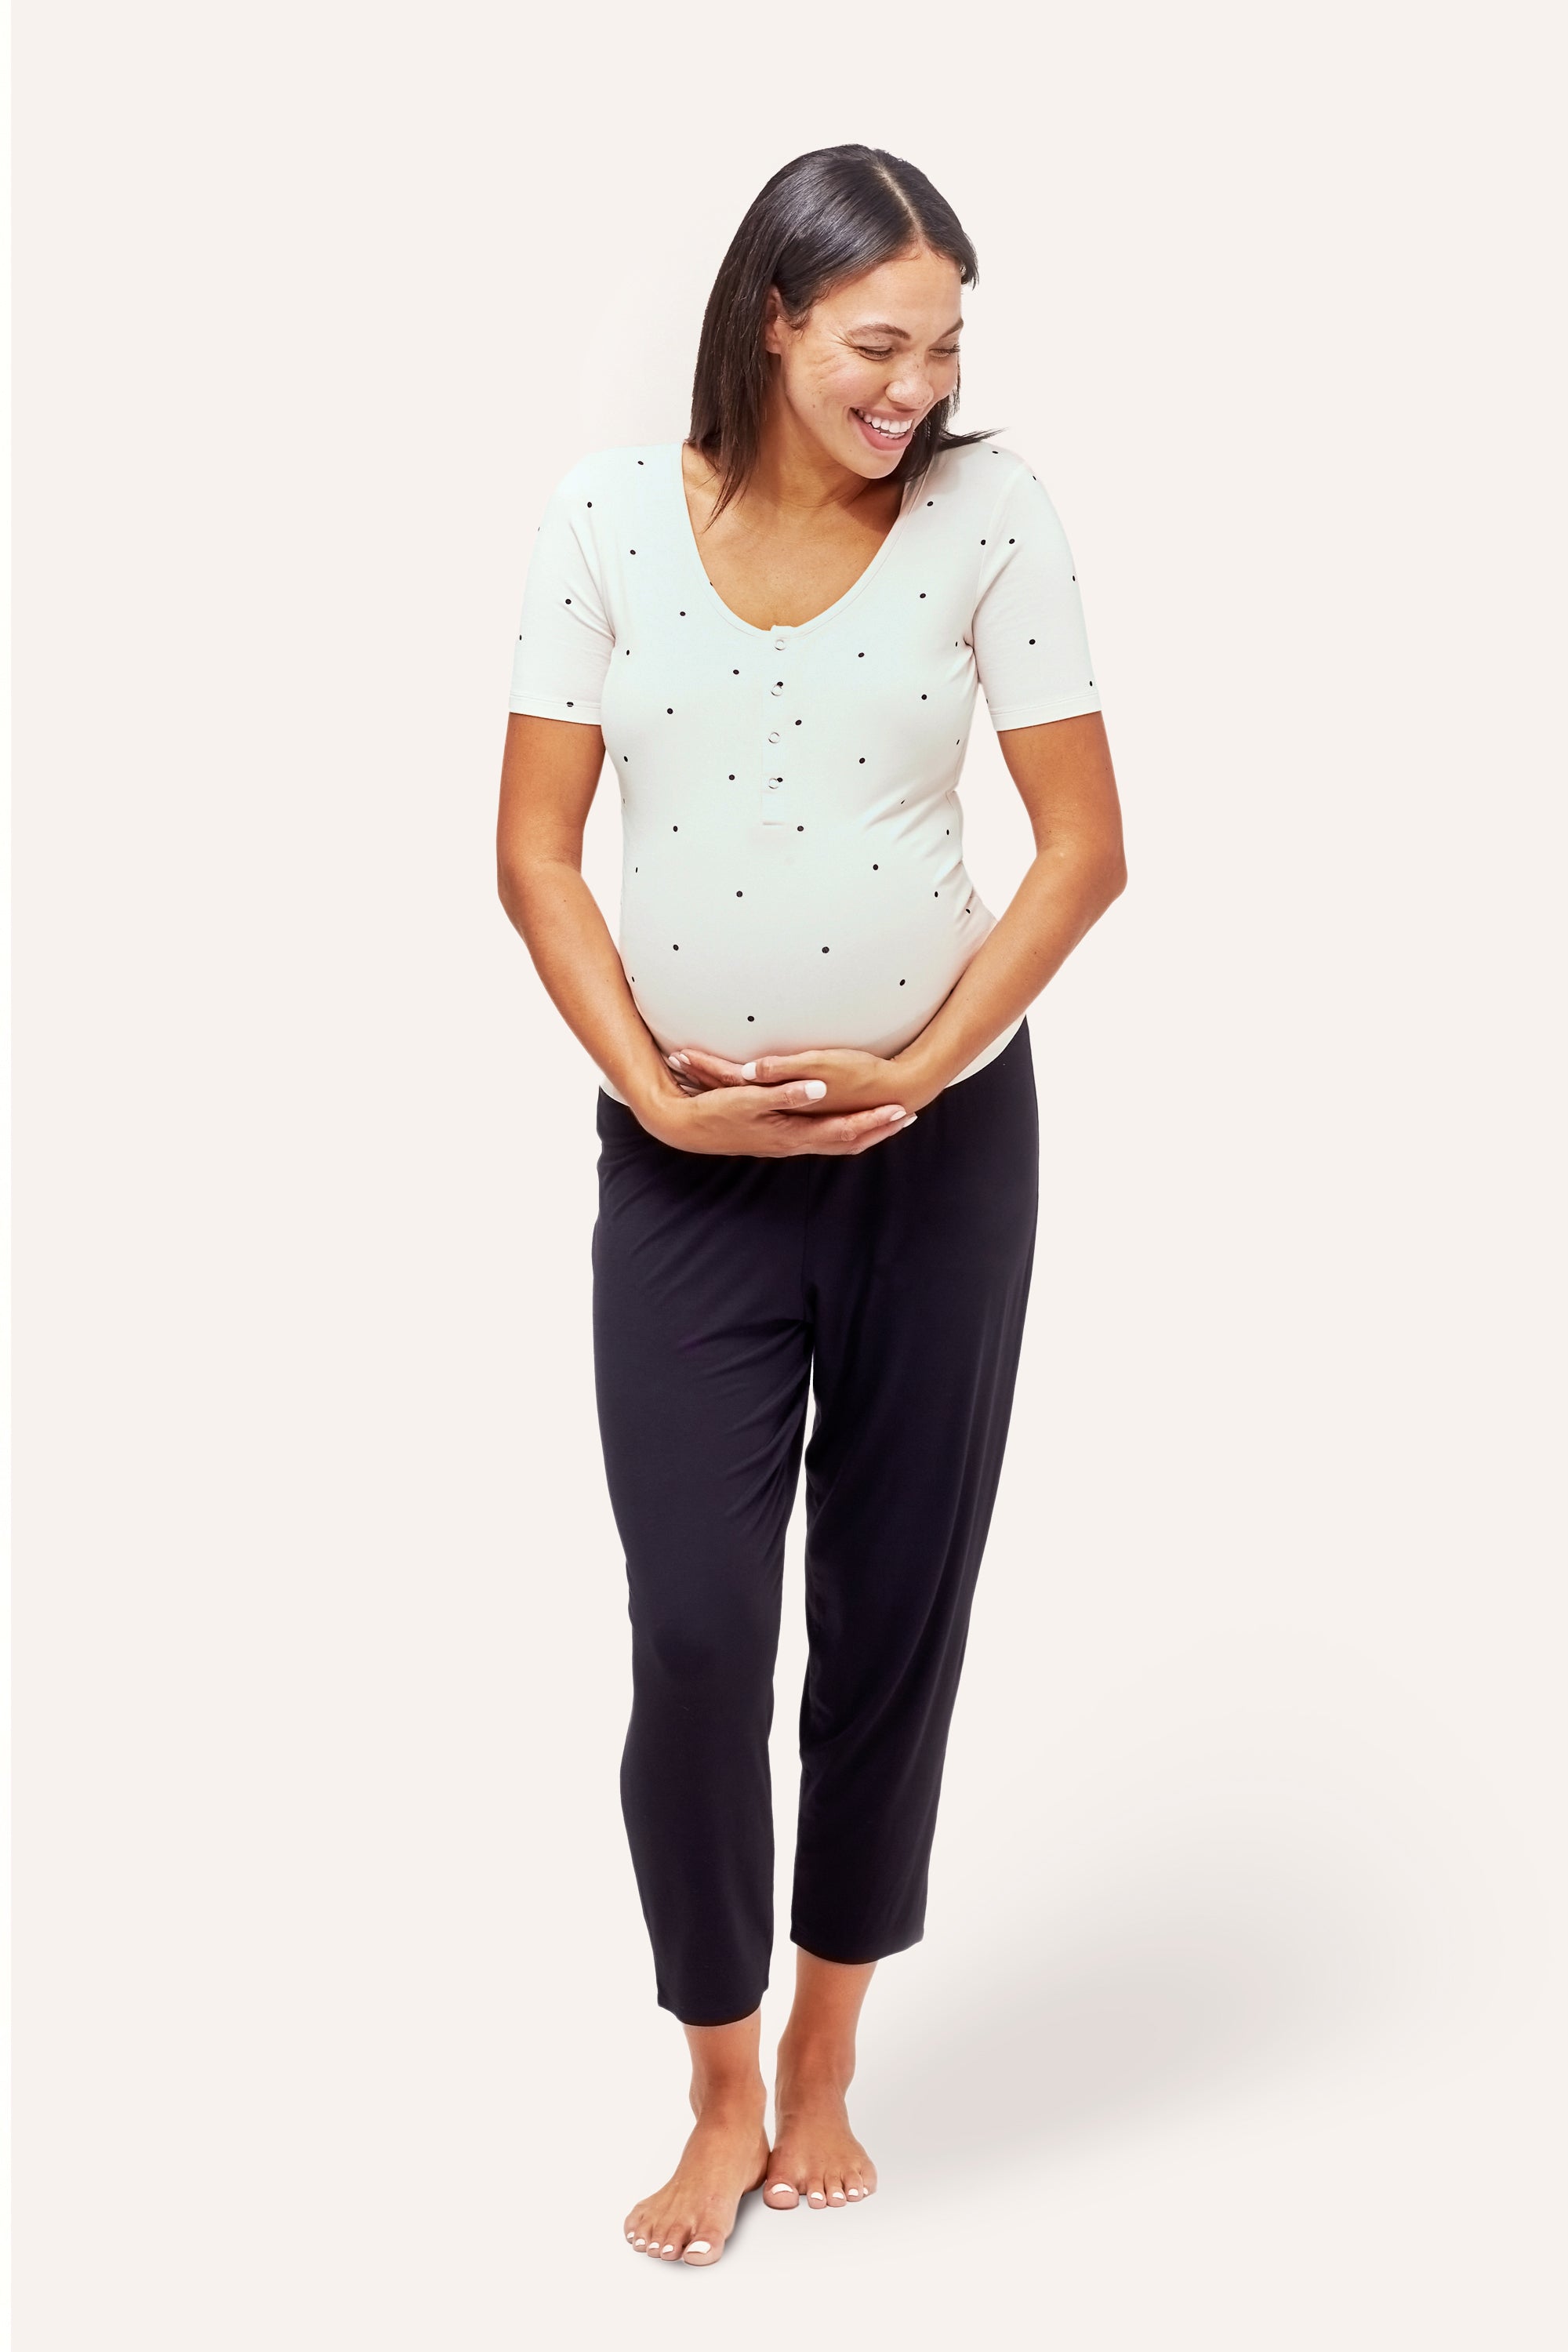 Miyanuby 3 Pieces Maternity Nursing Pajamas Set Short Sleeve Breastfeeding  Shirts with Built in Bra, Pregnancy Shorts & Pants 3 Piece Nursing